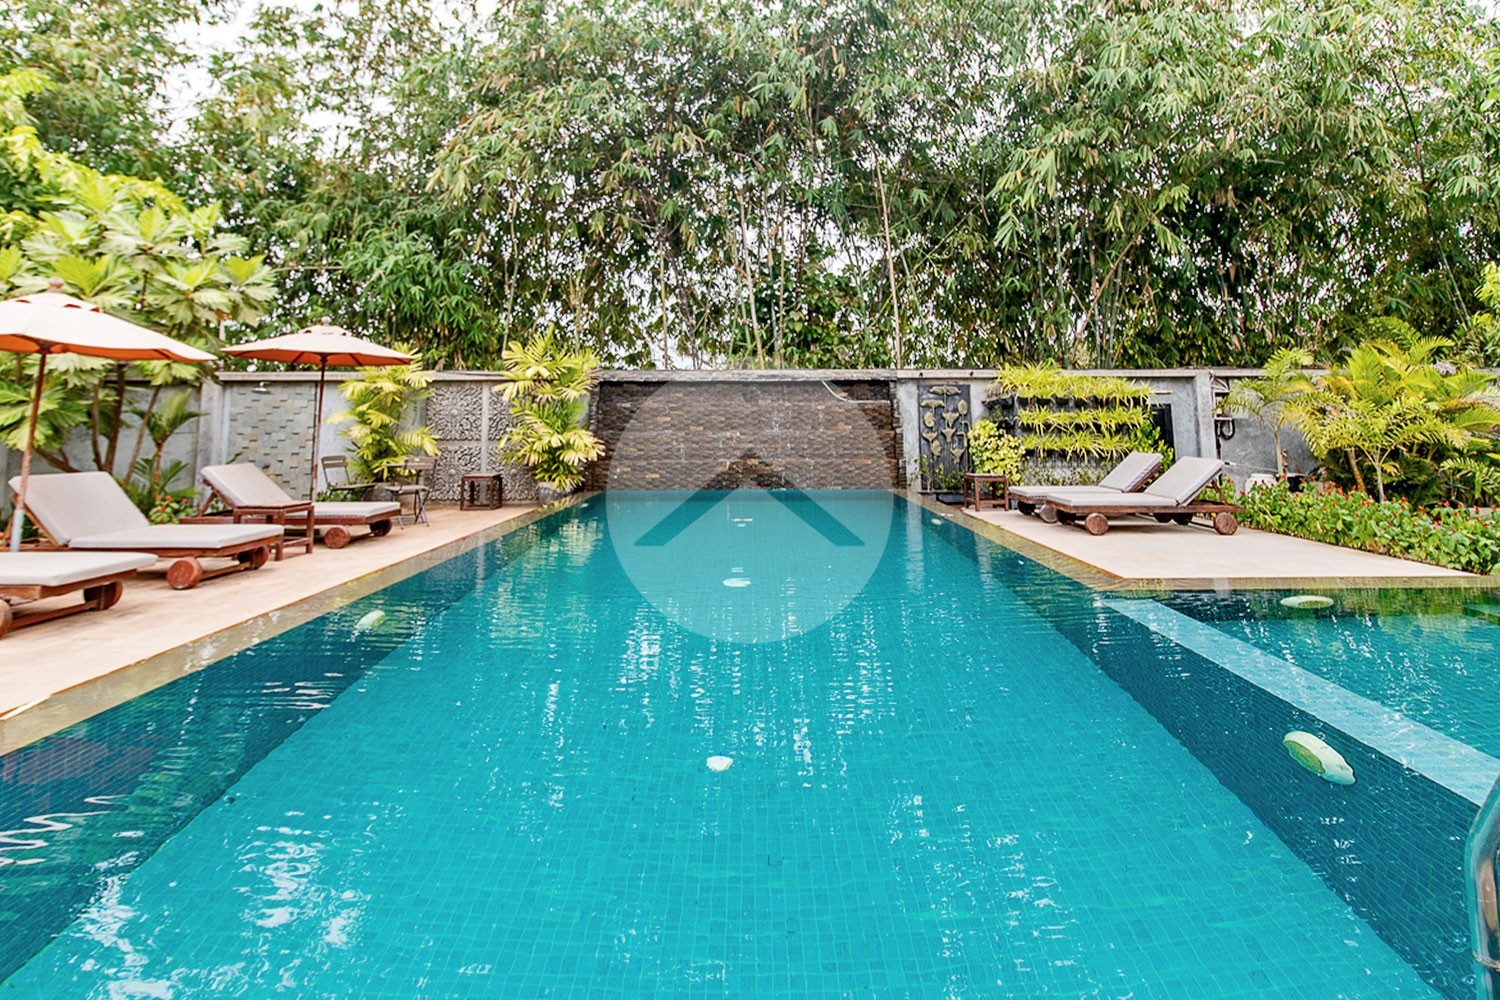 2 Bedroom Villa For Sale - Ring Road, Siem Reap thumbnail